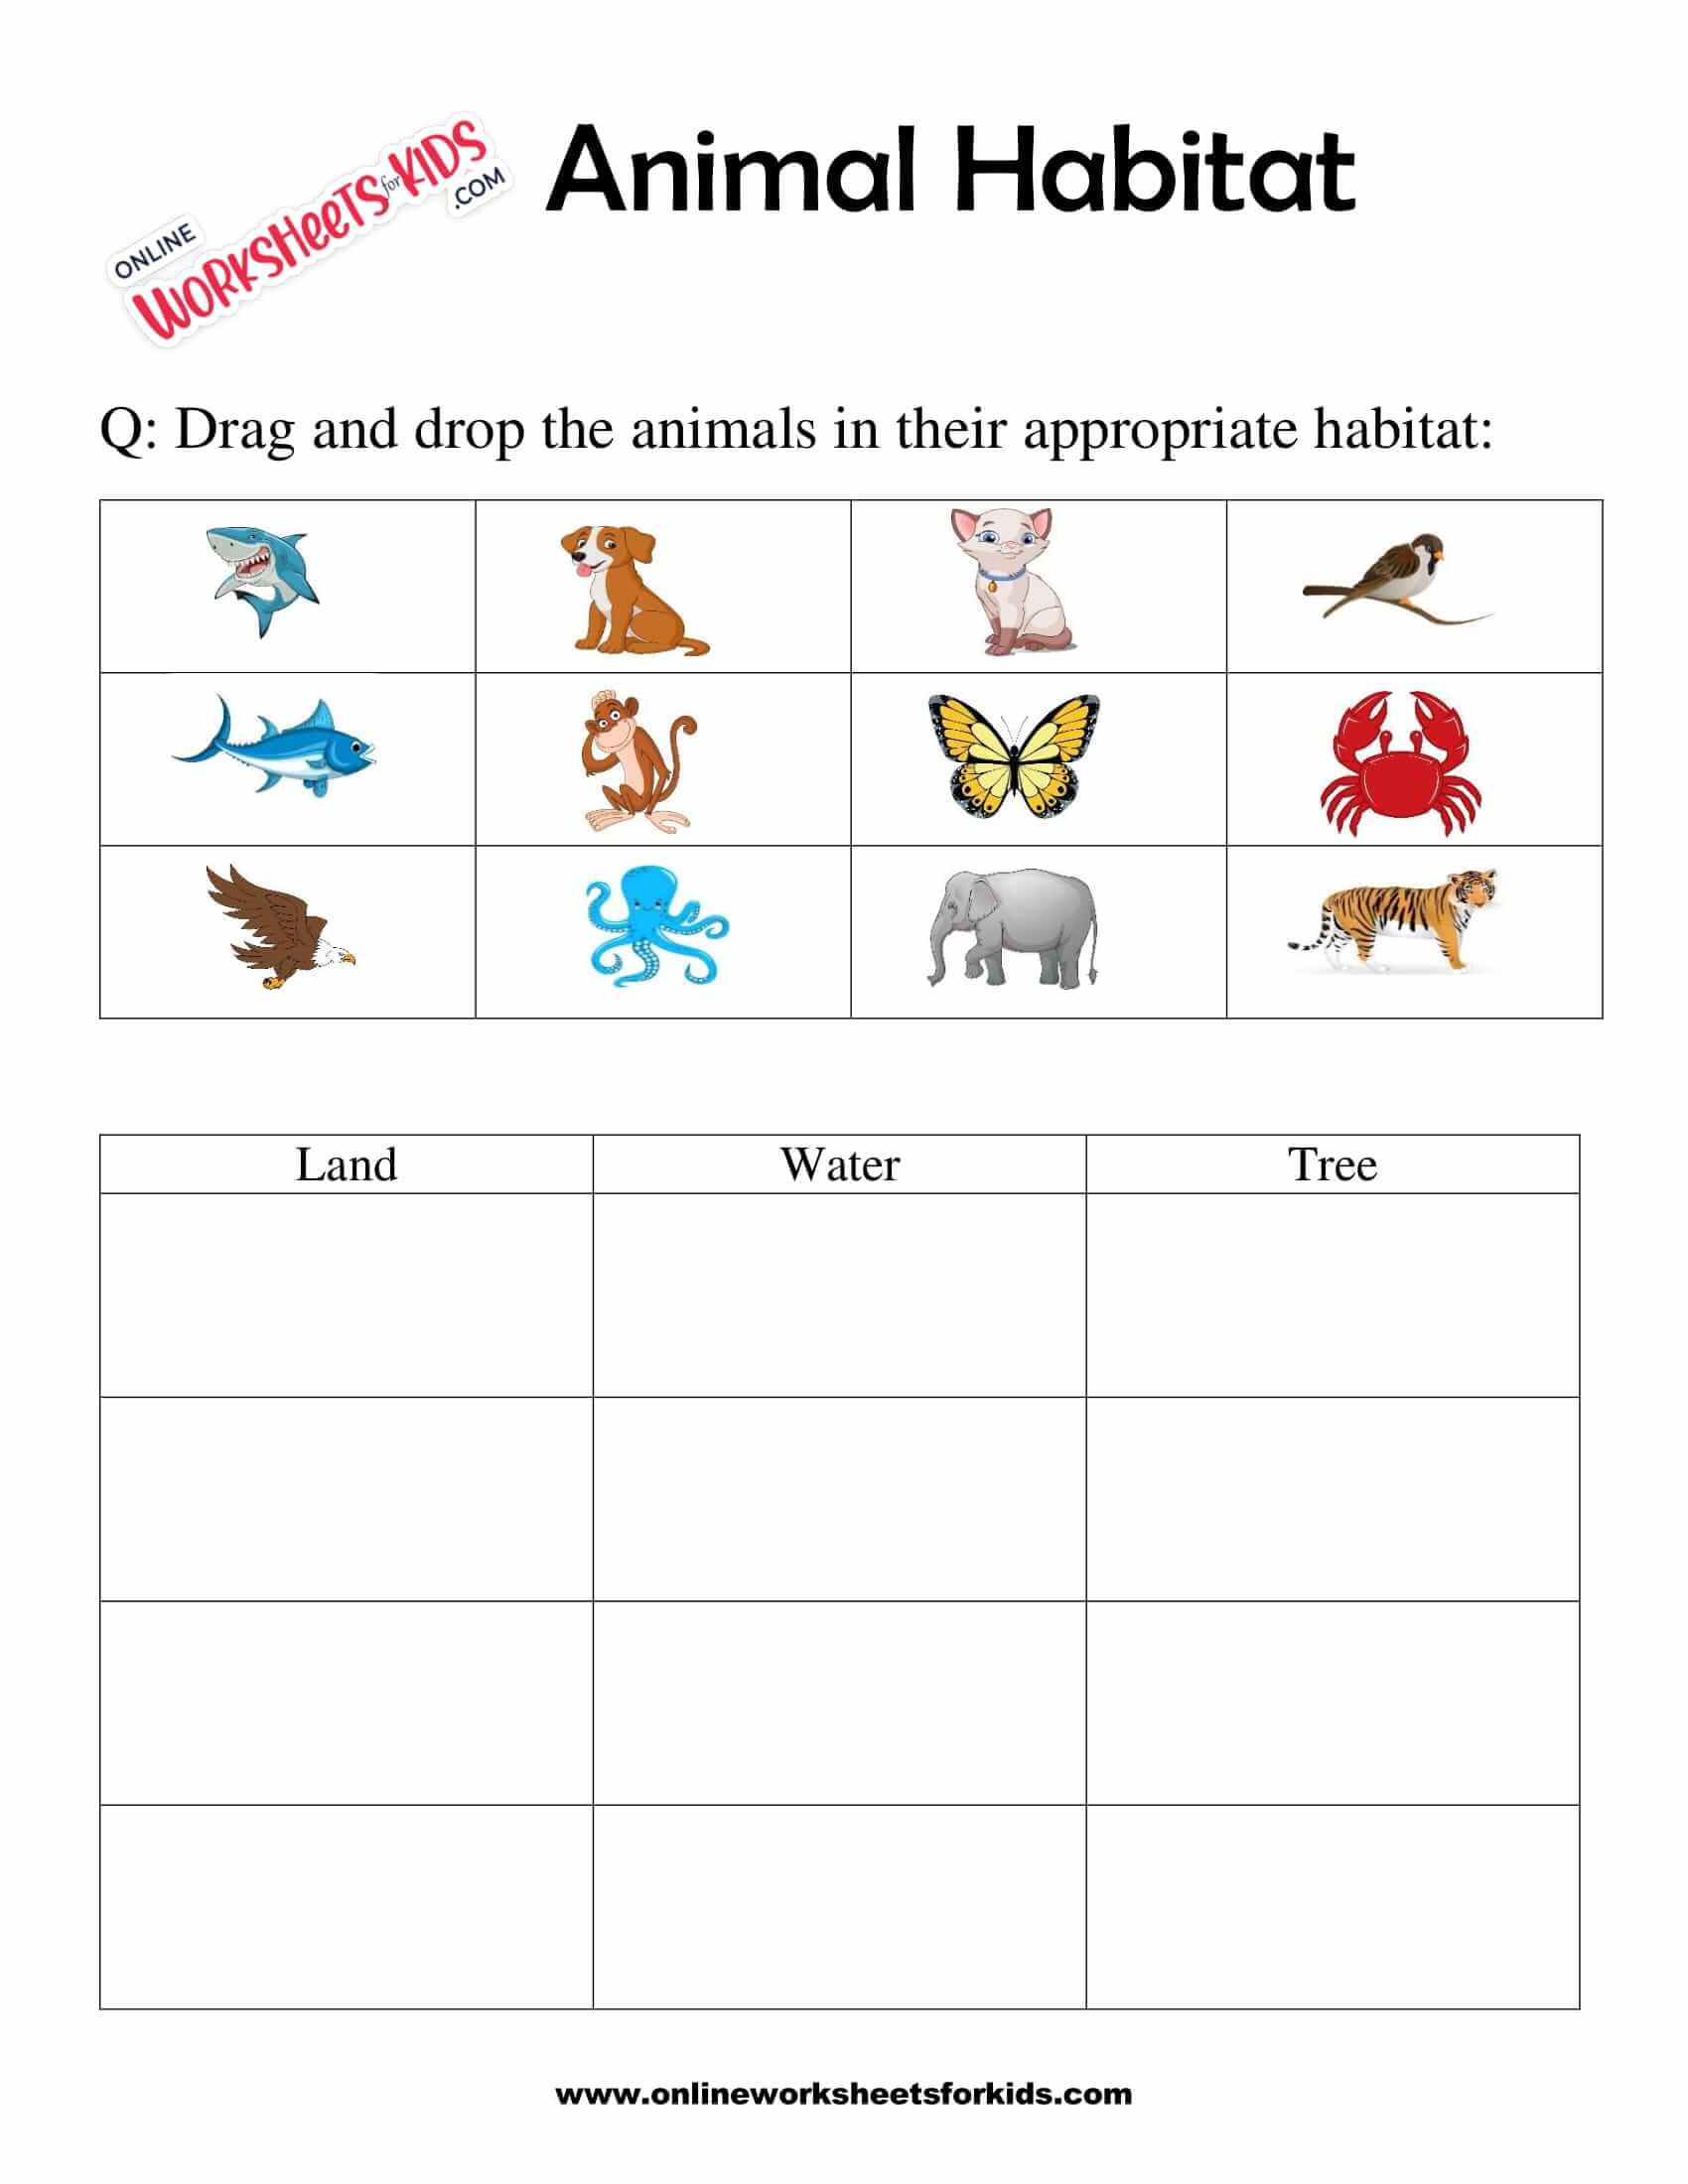 animal-habitats-worksheet-k5-learning-animal-habitats-worksheets-k5-learning-landyn-thomas